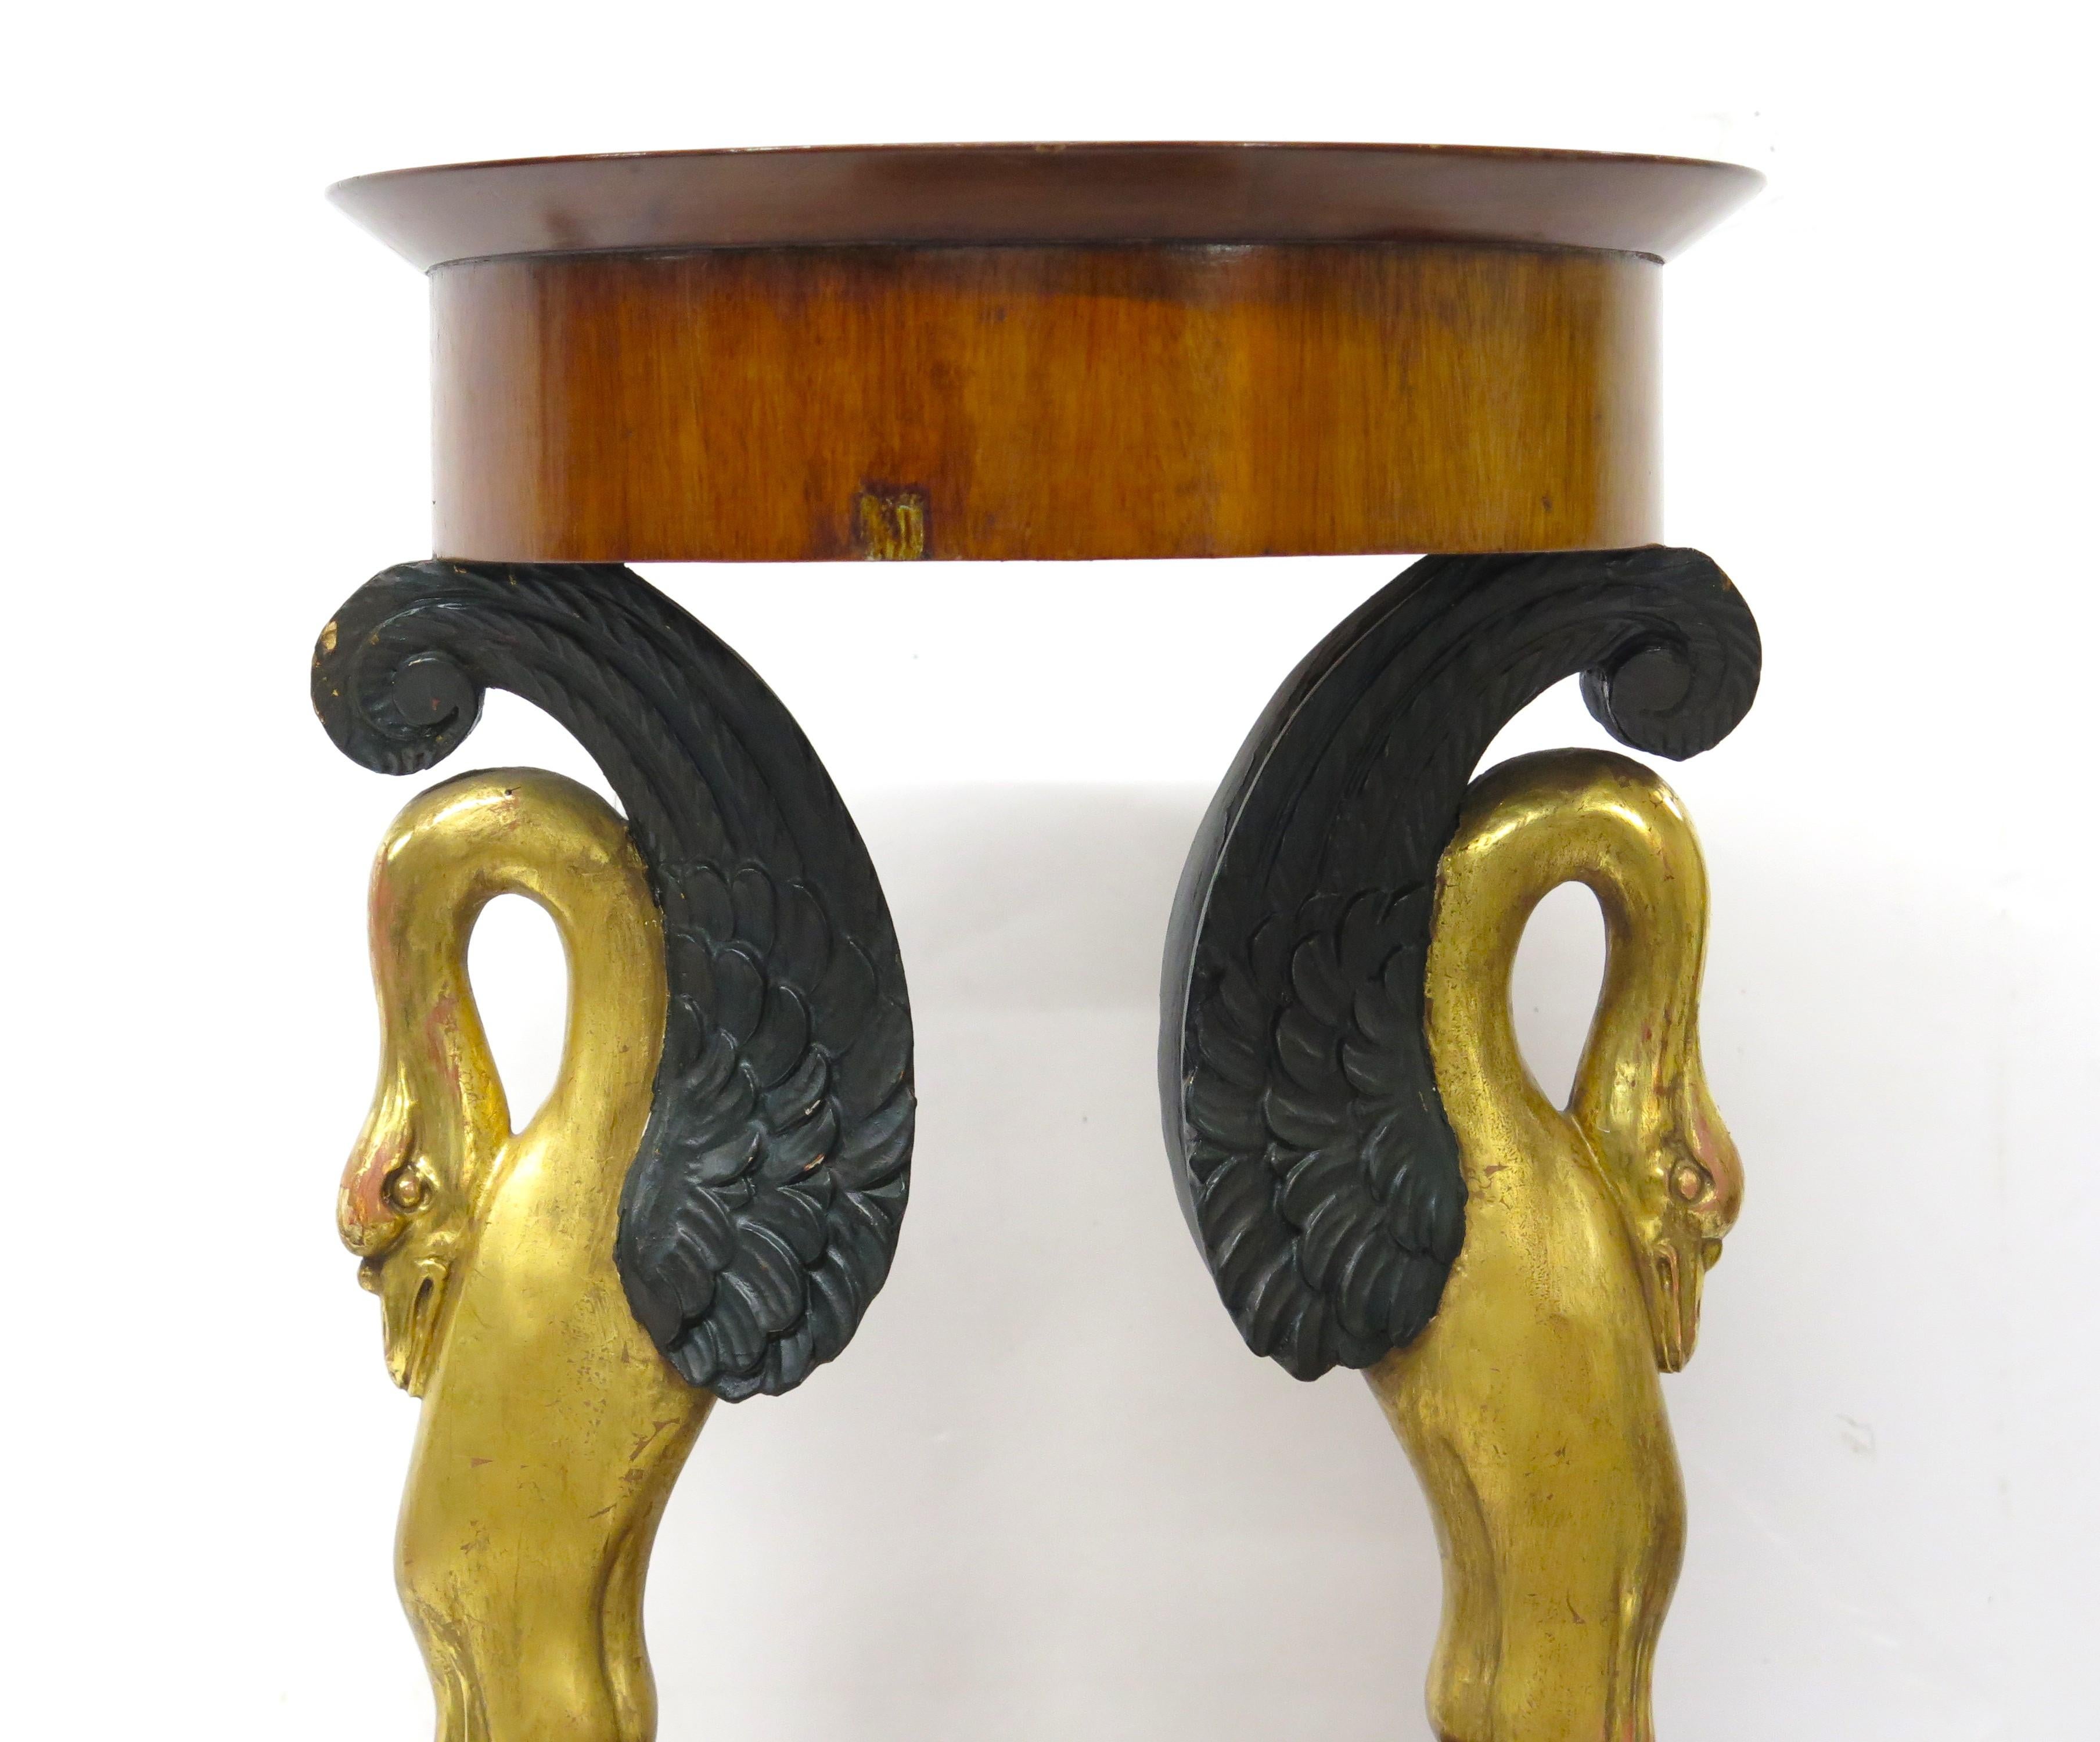 Rafraichissoir-Tisch aus dem 19. Jahrhundert (Mahagoni) im Angebot